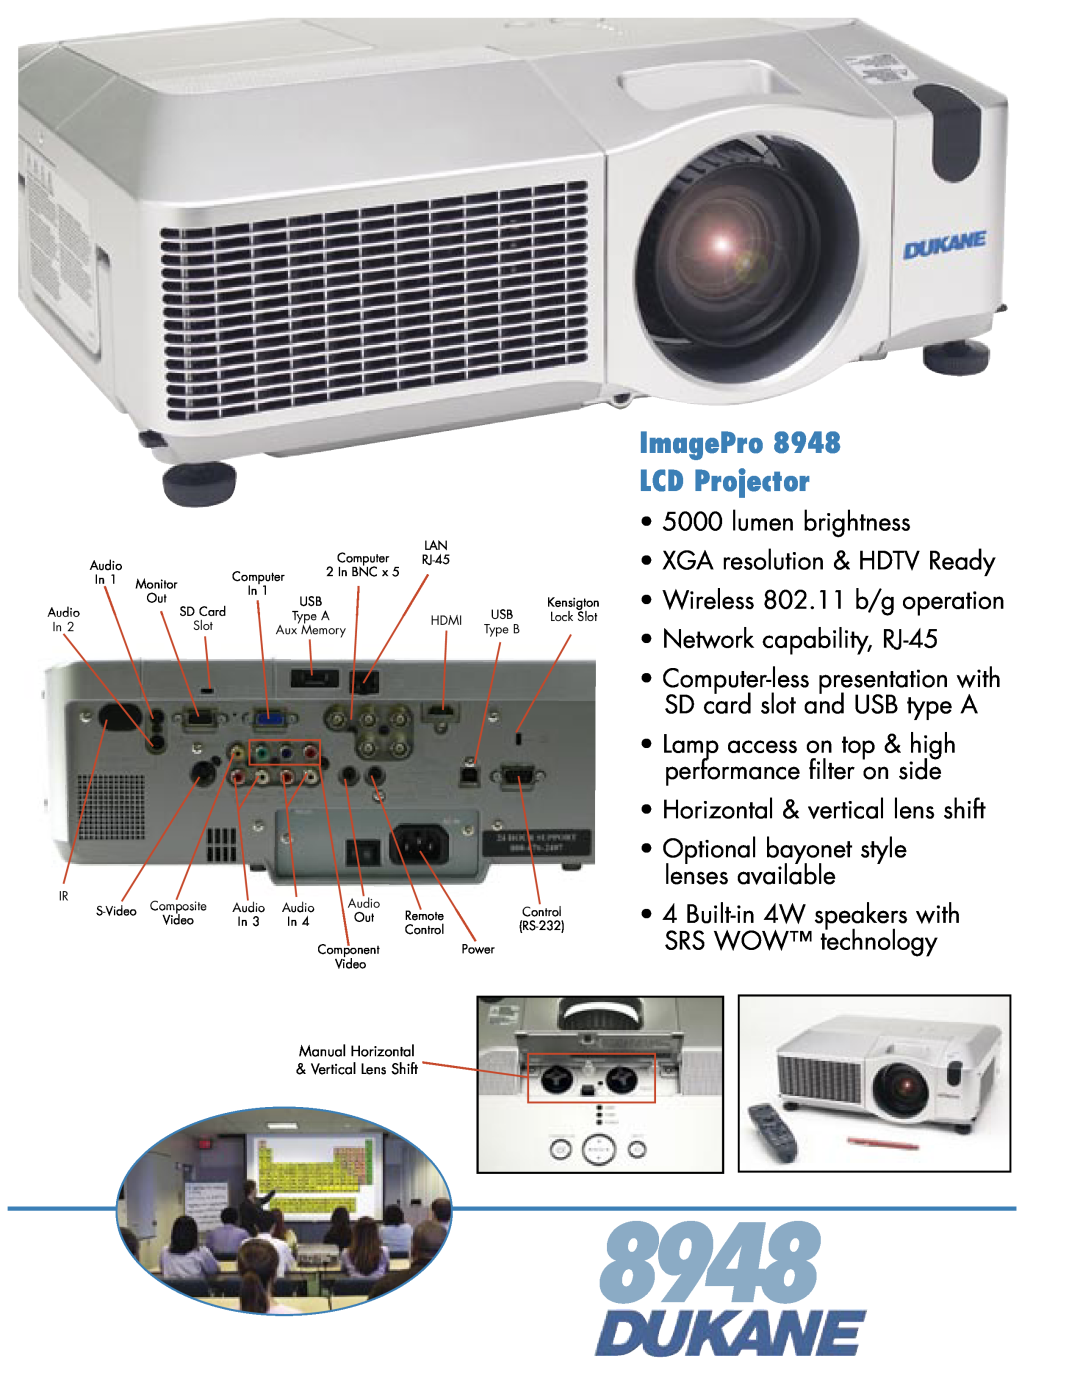 Dukane 8948 manual ImagePro LCD Projector 